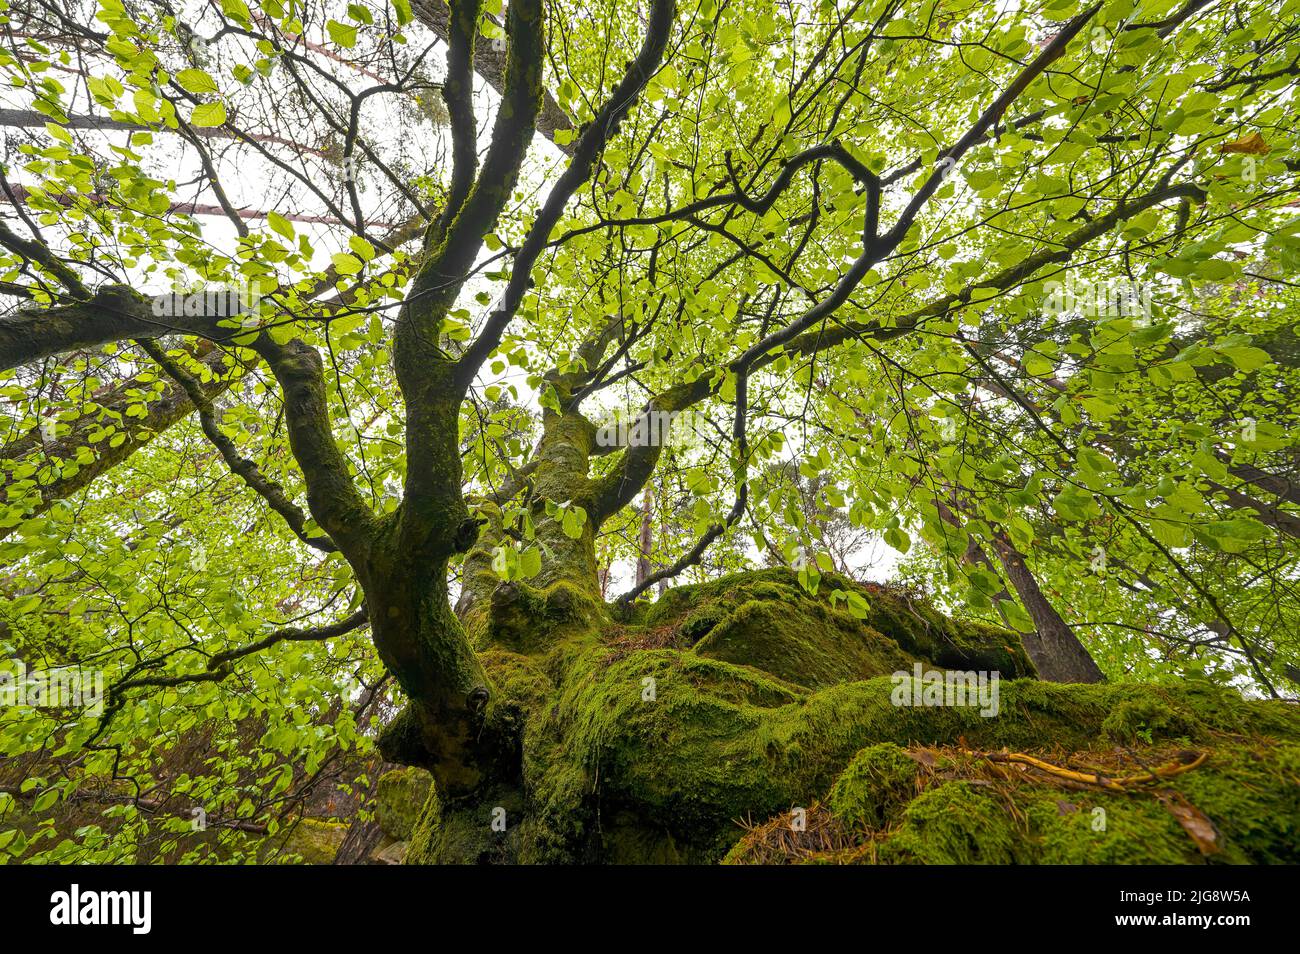 European beech with overgrown trunk and fresh light green foliage, spring, Pfälzerwald Nature Park, Pfälzerwald-Nordvogesen Biosphere Reserve, Germany, Rhineland-Palatinate Stock Photo